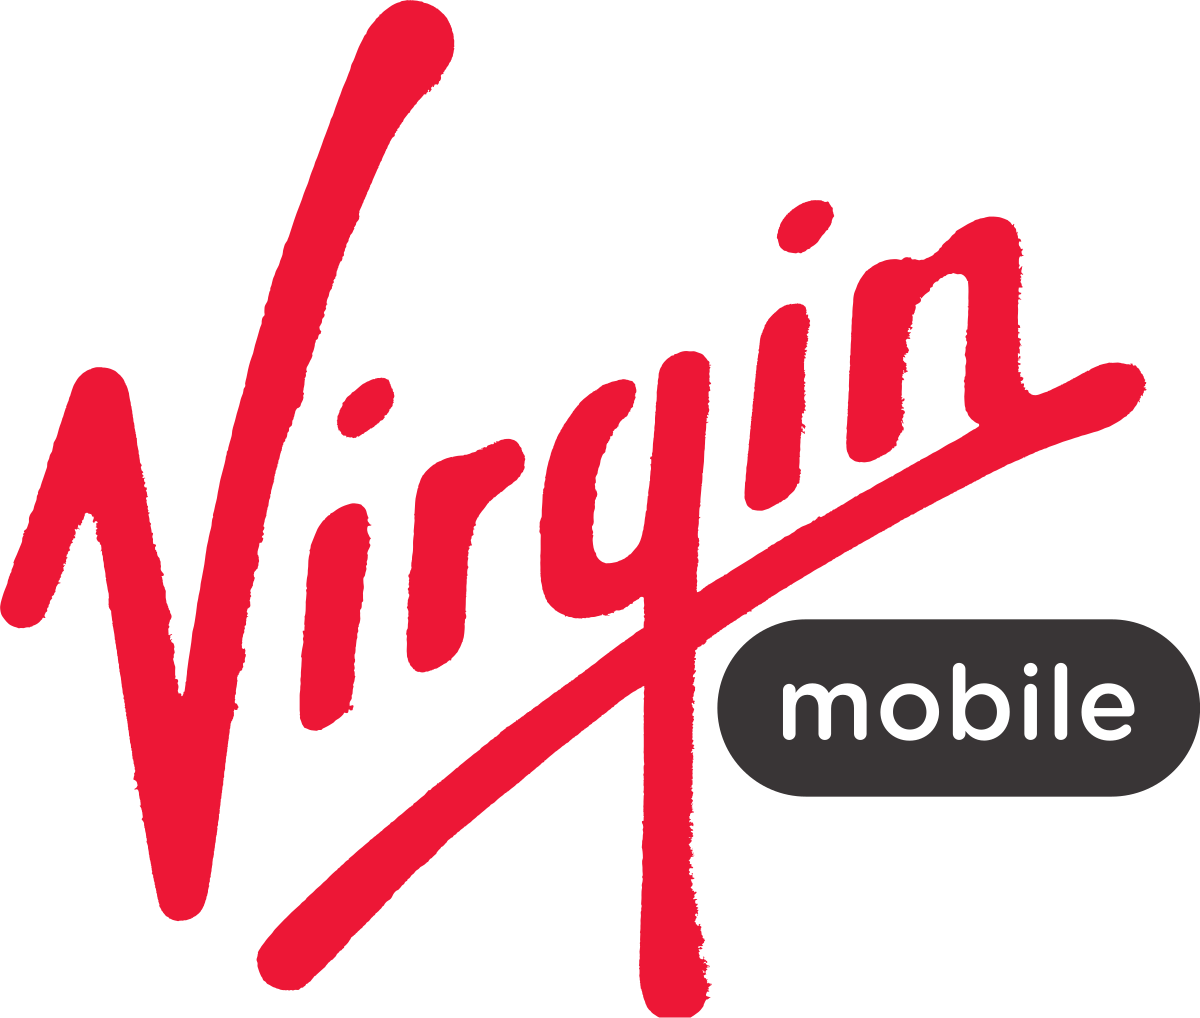 Virgin Mobile Wikipedia